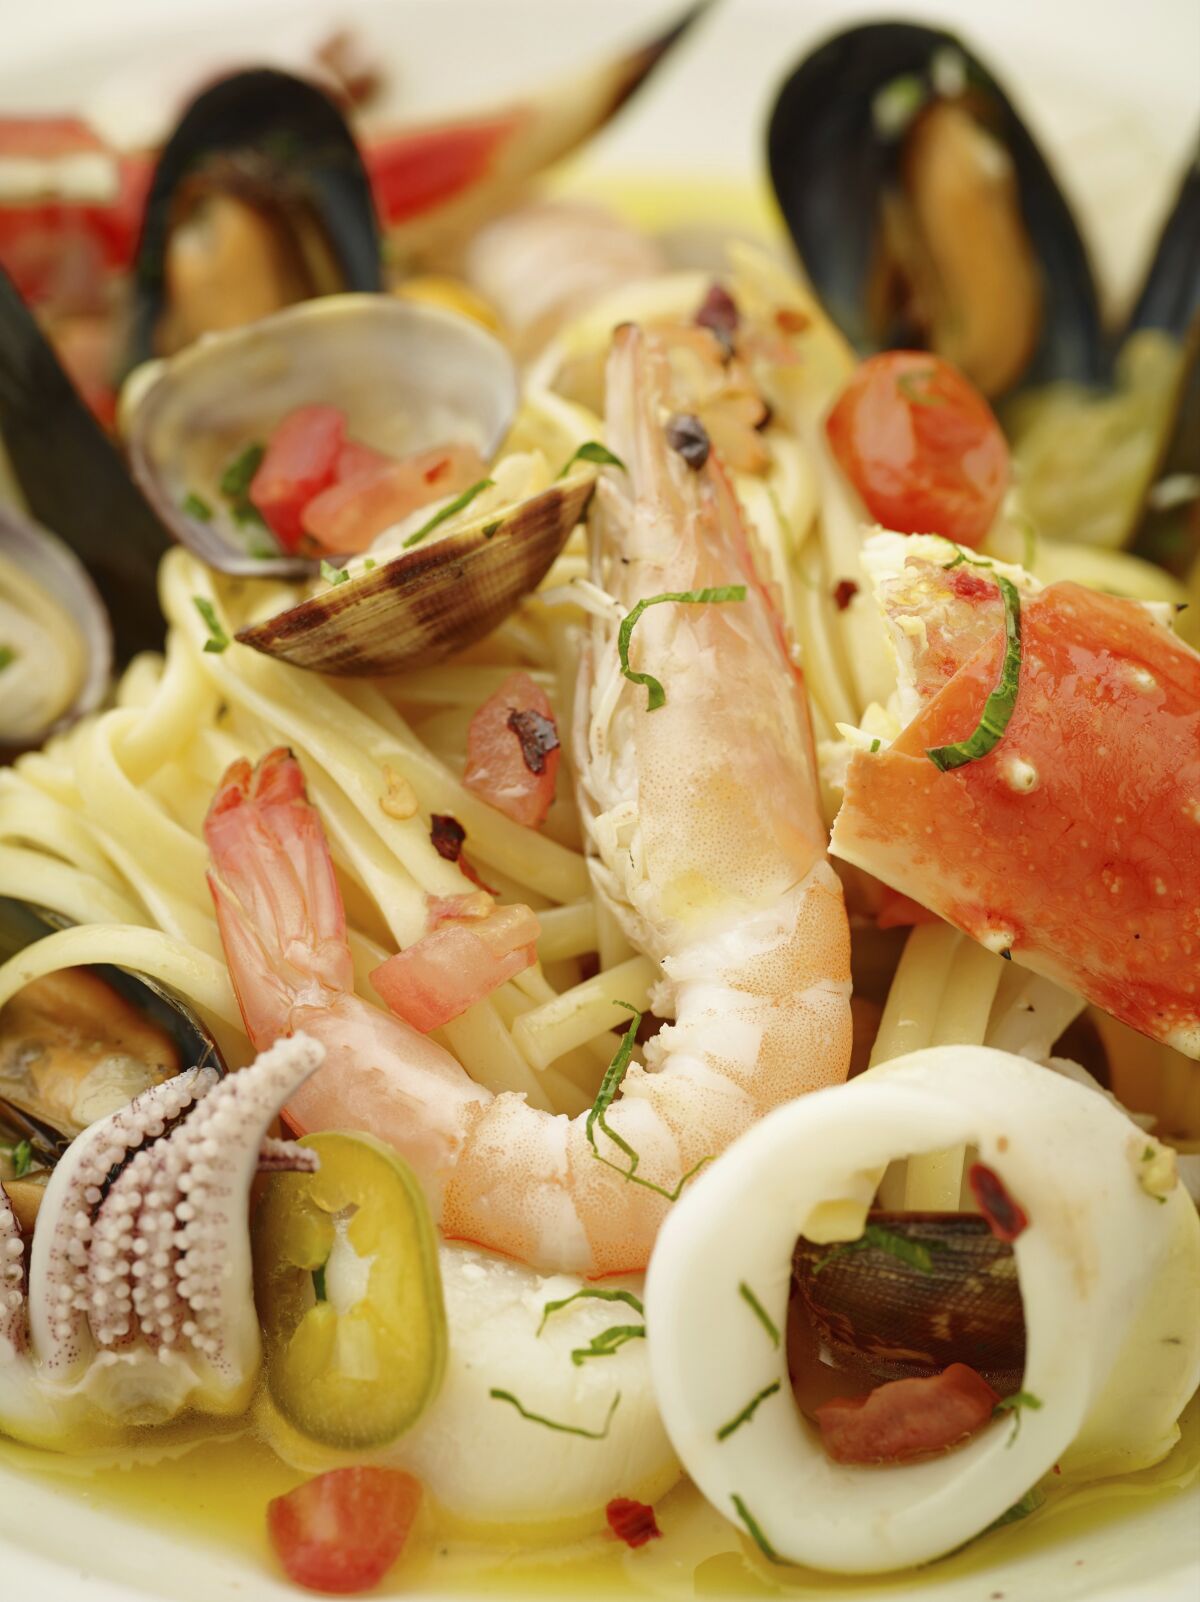 A close-up of an Italian seafood dish.